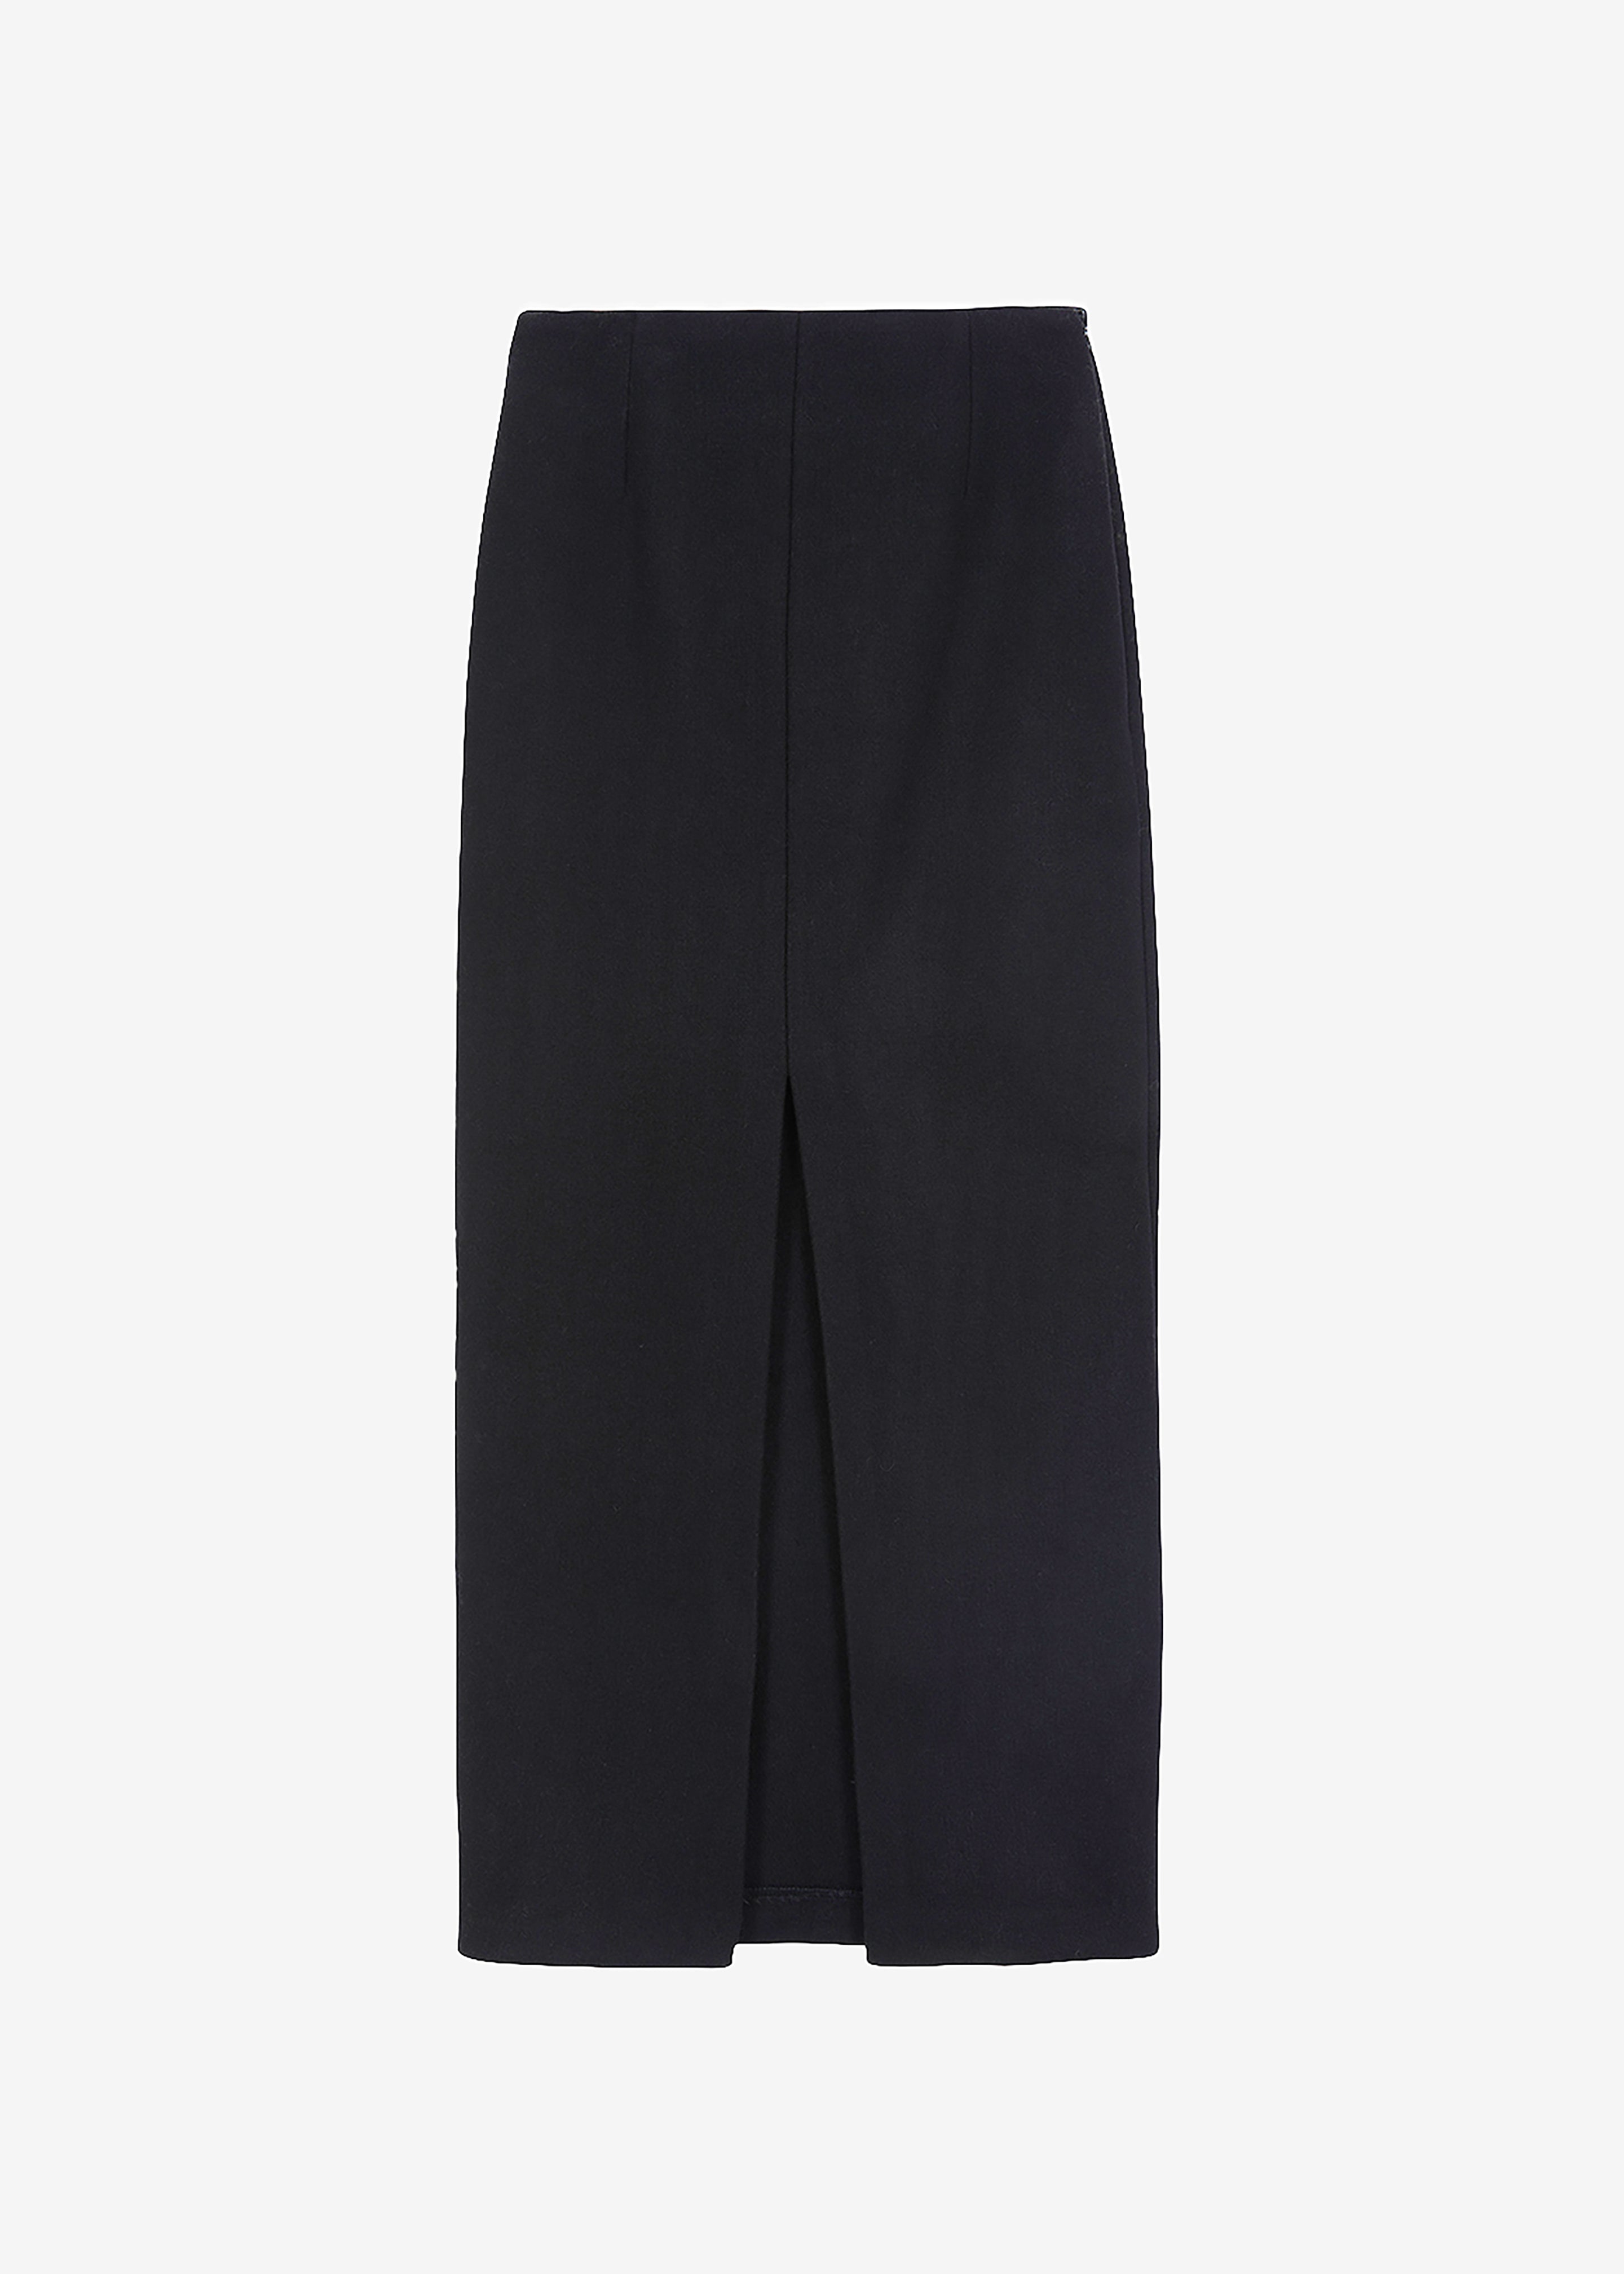 Neasi Wool-Blend Pencil Skirt - Black - 8